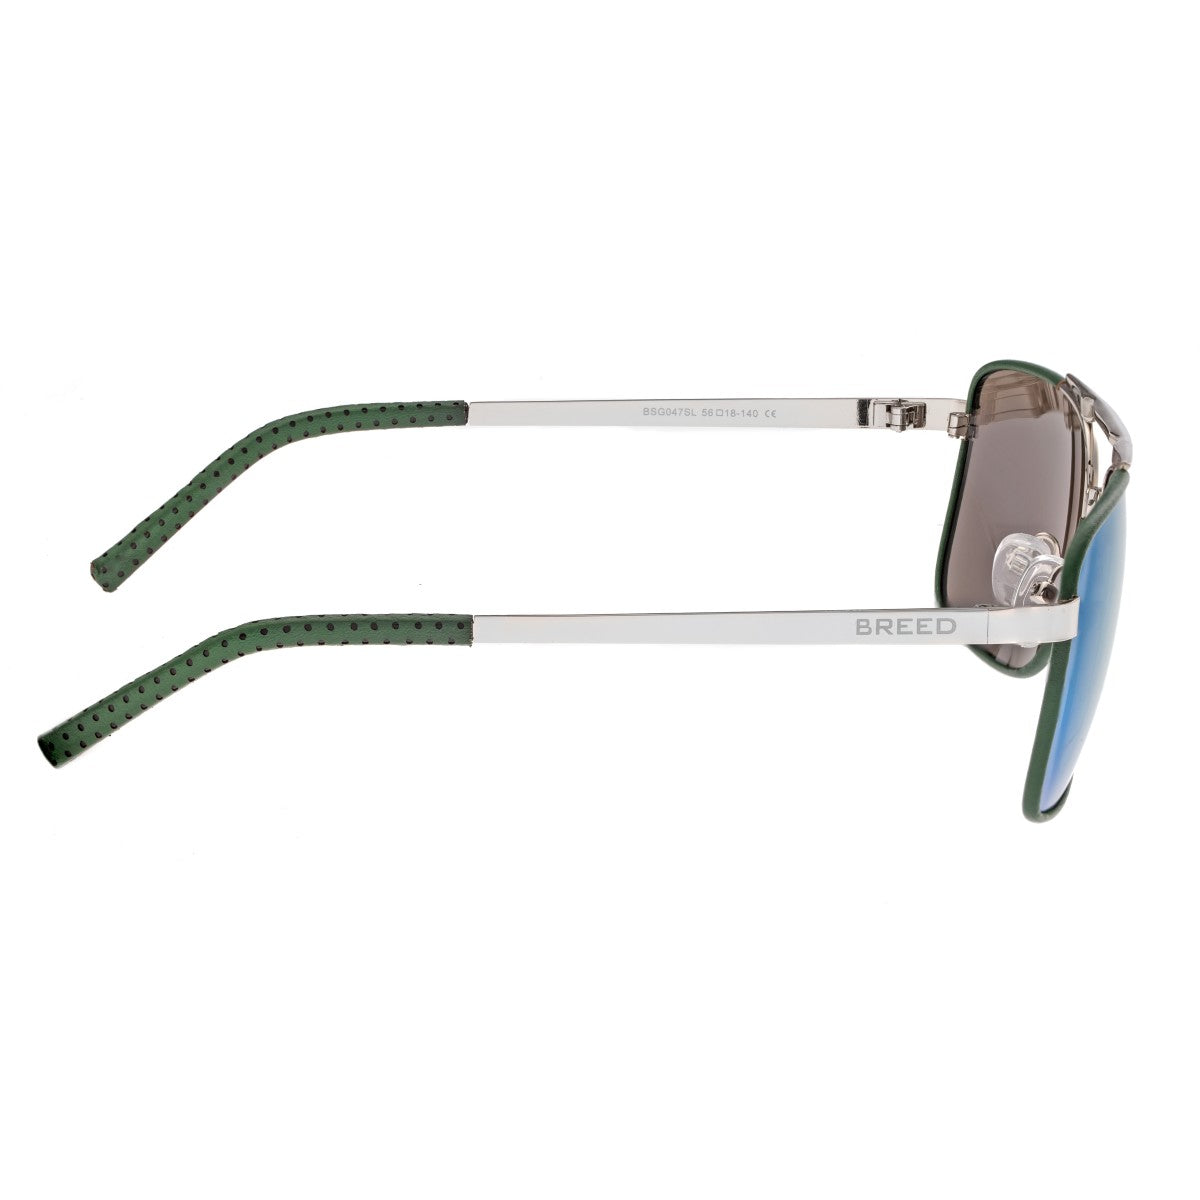 Breed Draco Polarized Sunglasses - Silver/Blue-Green - BSG047SL